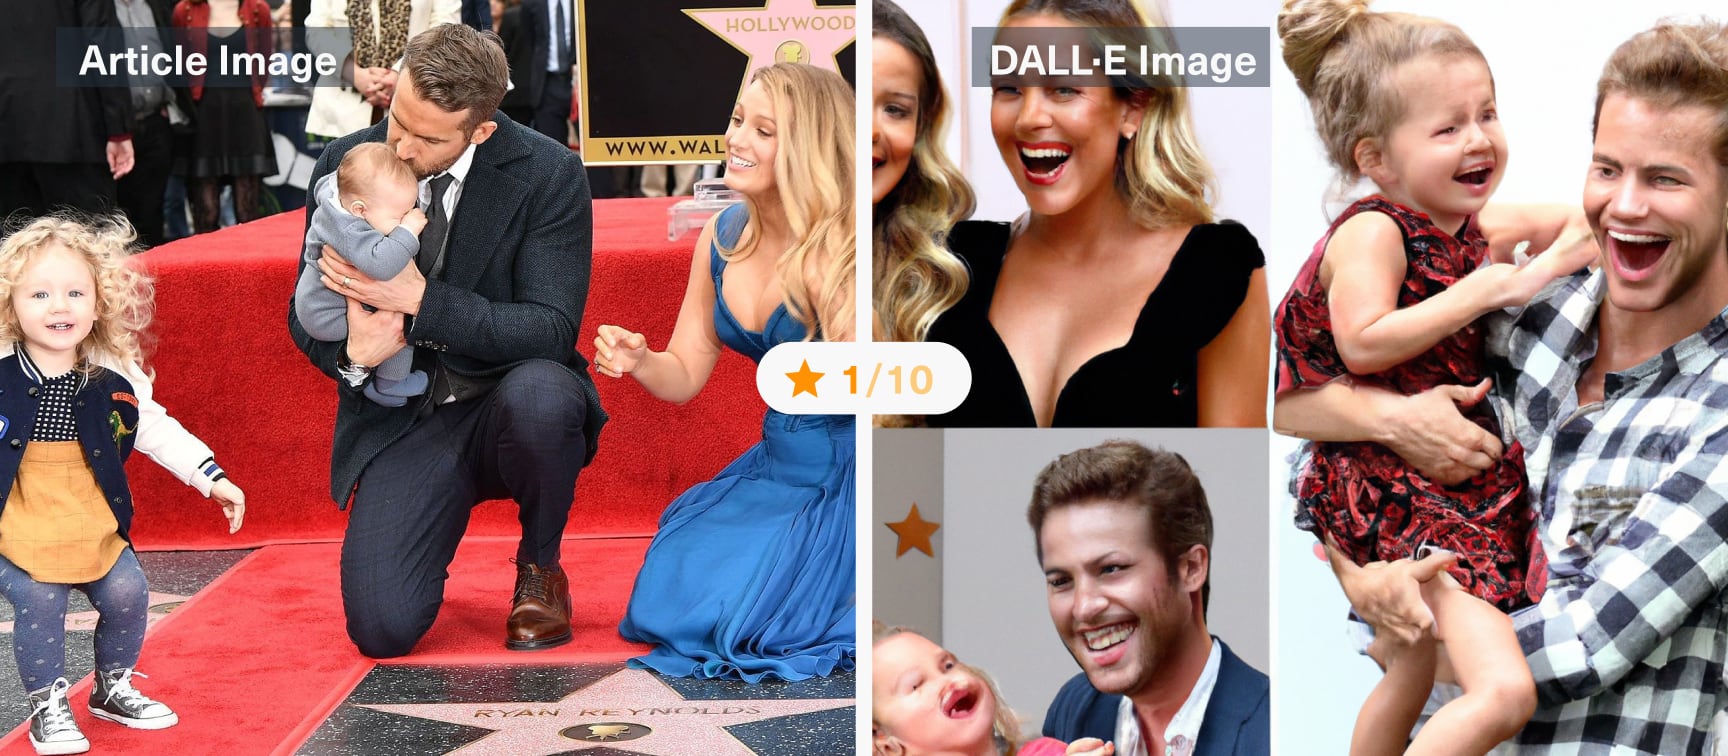 DALL-E meets News API: “Blake Lively, Ryan Reynolds Family Photos”